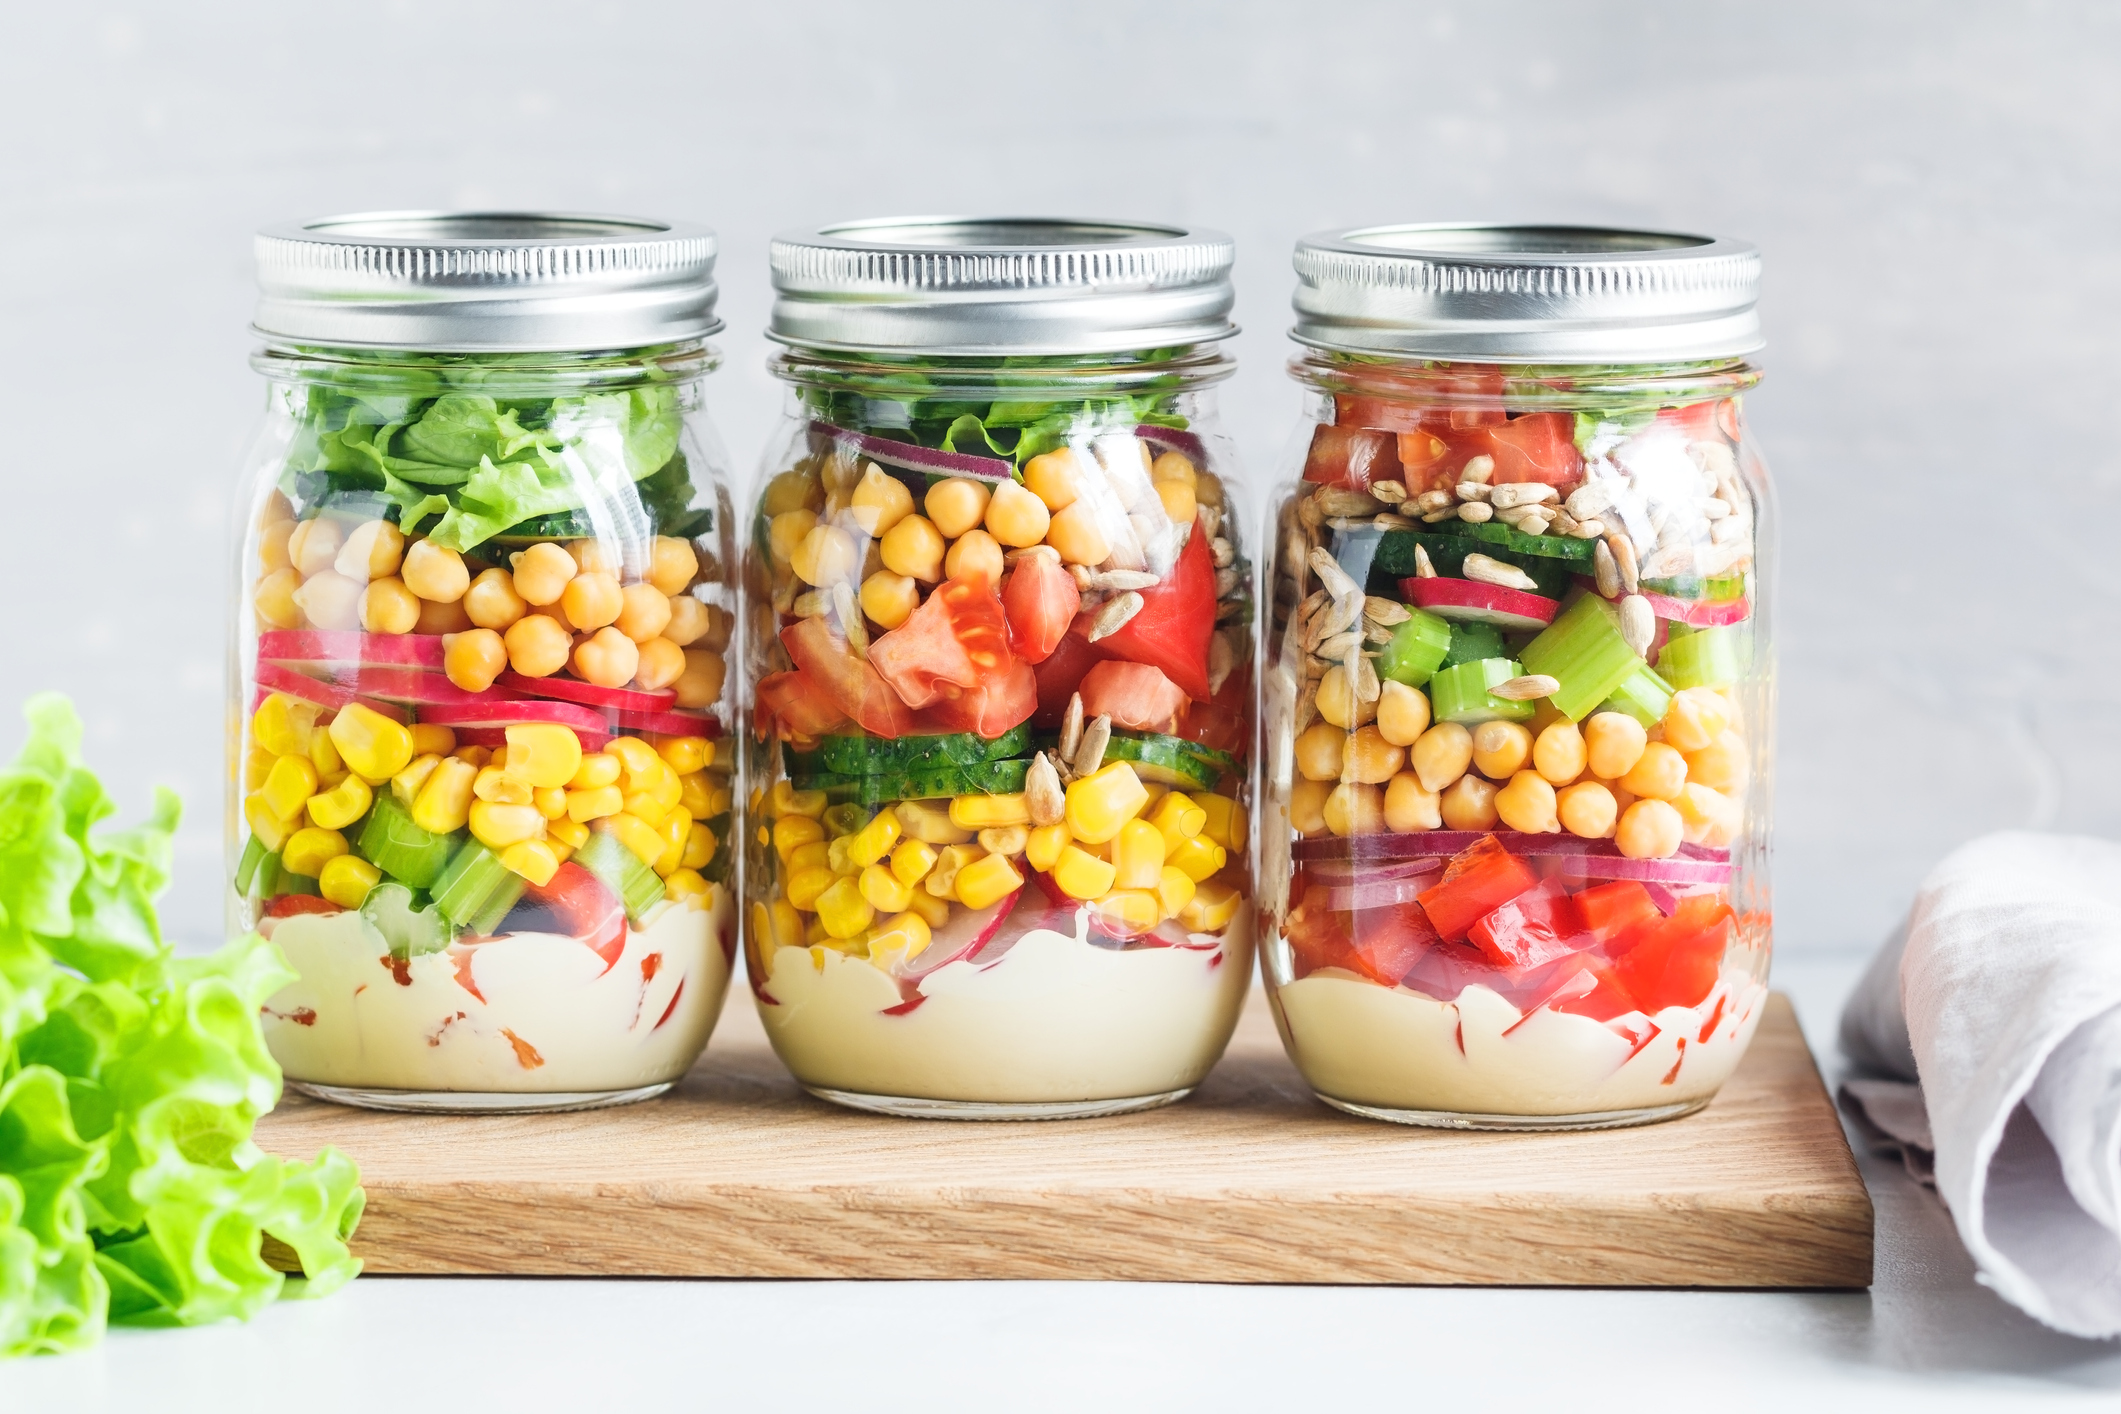 Premade Mason Jar Salads with corn, chickpeas, and other veggies